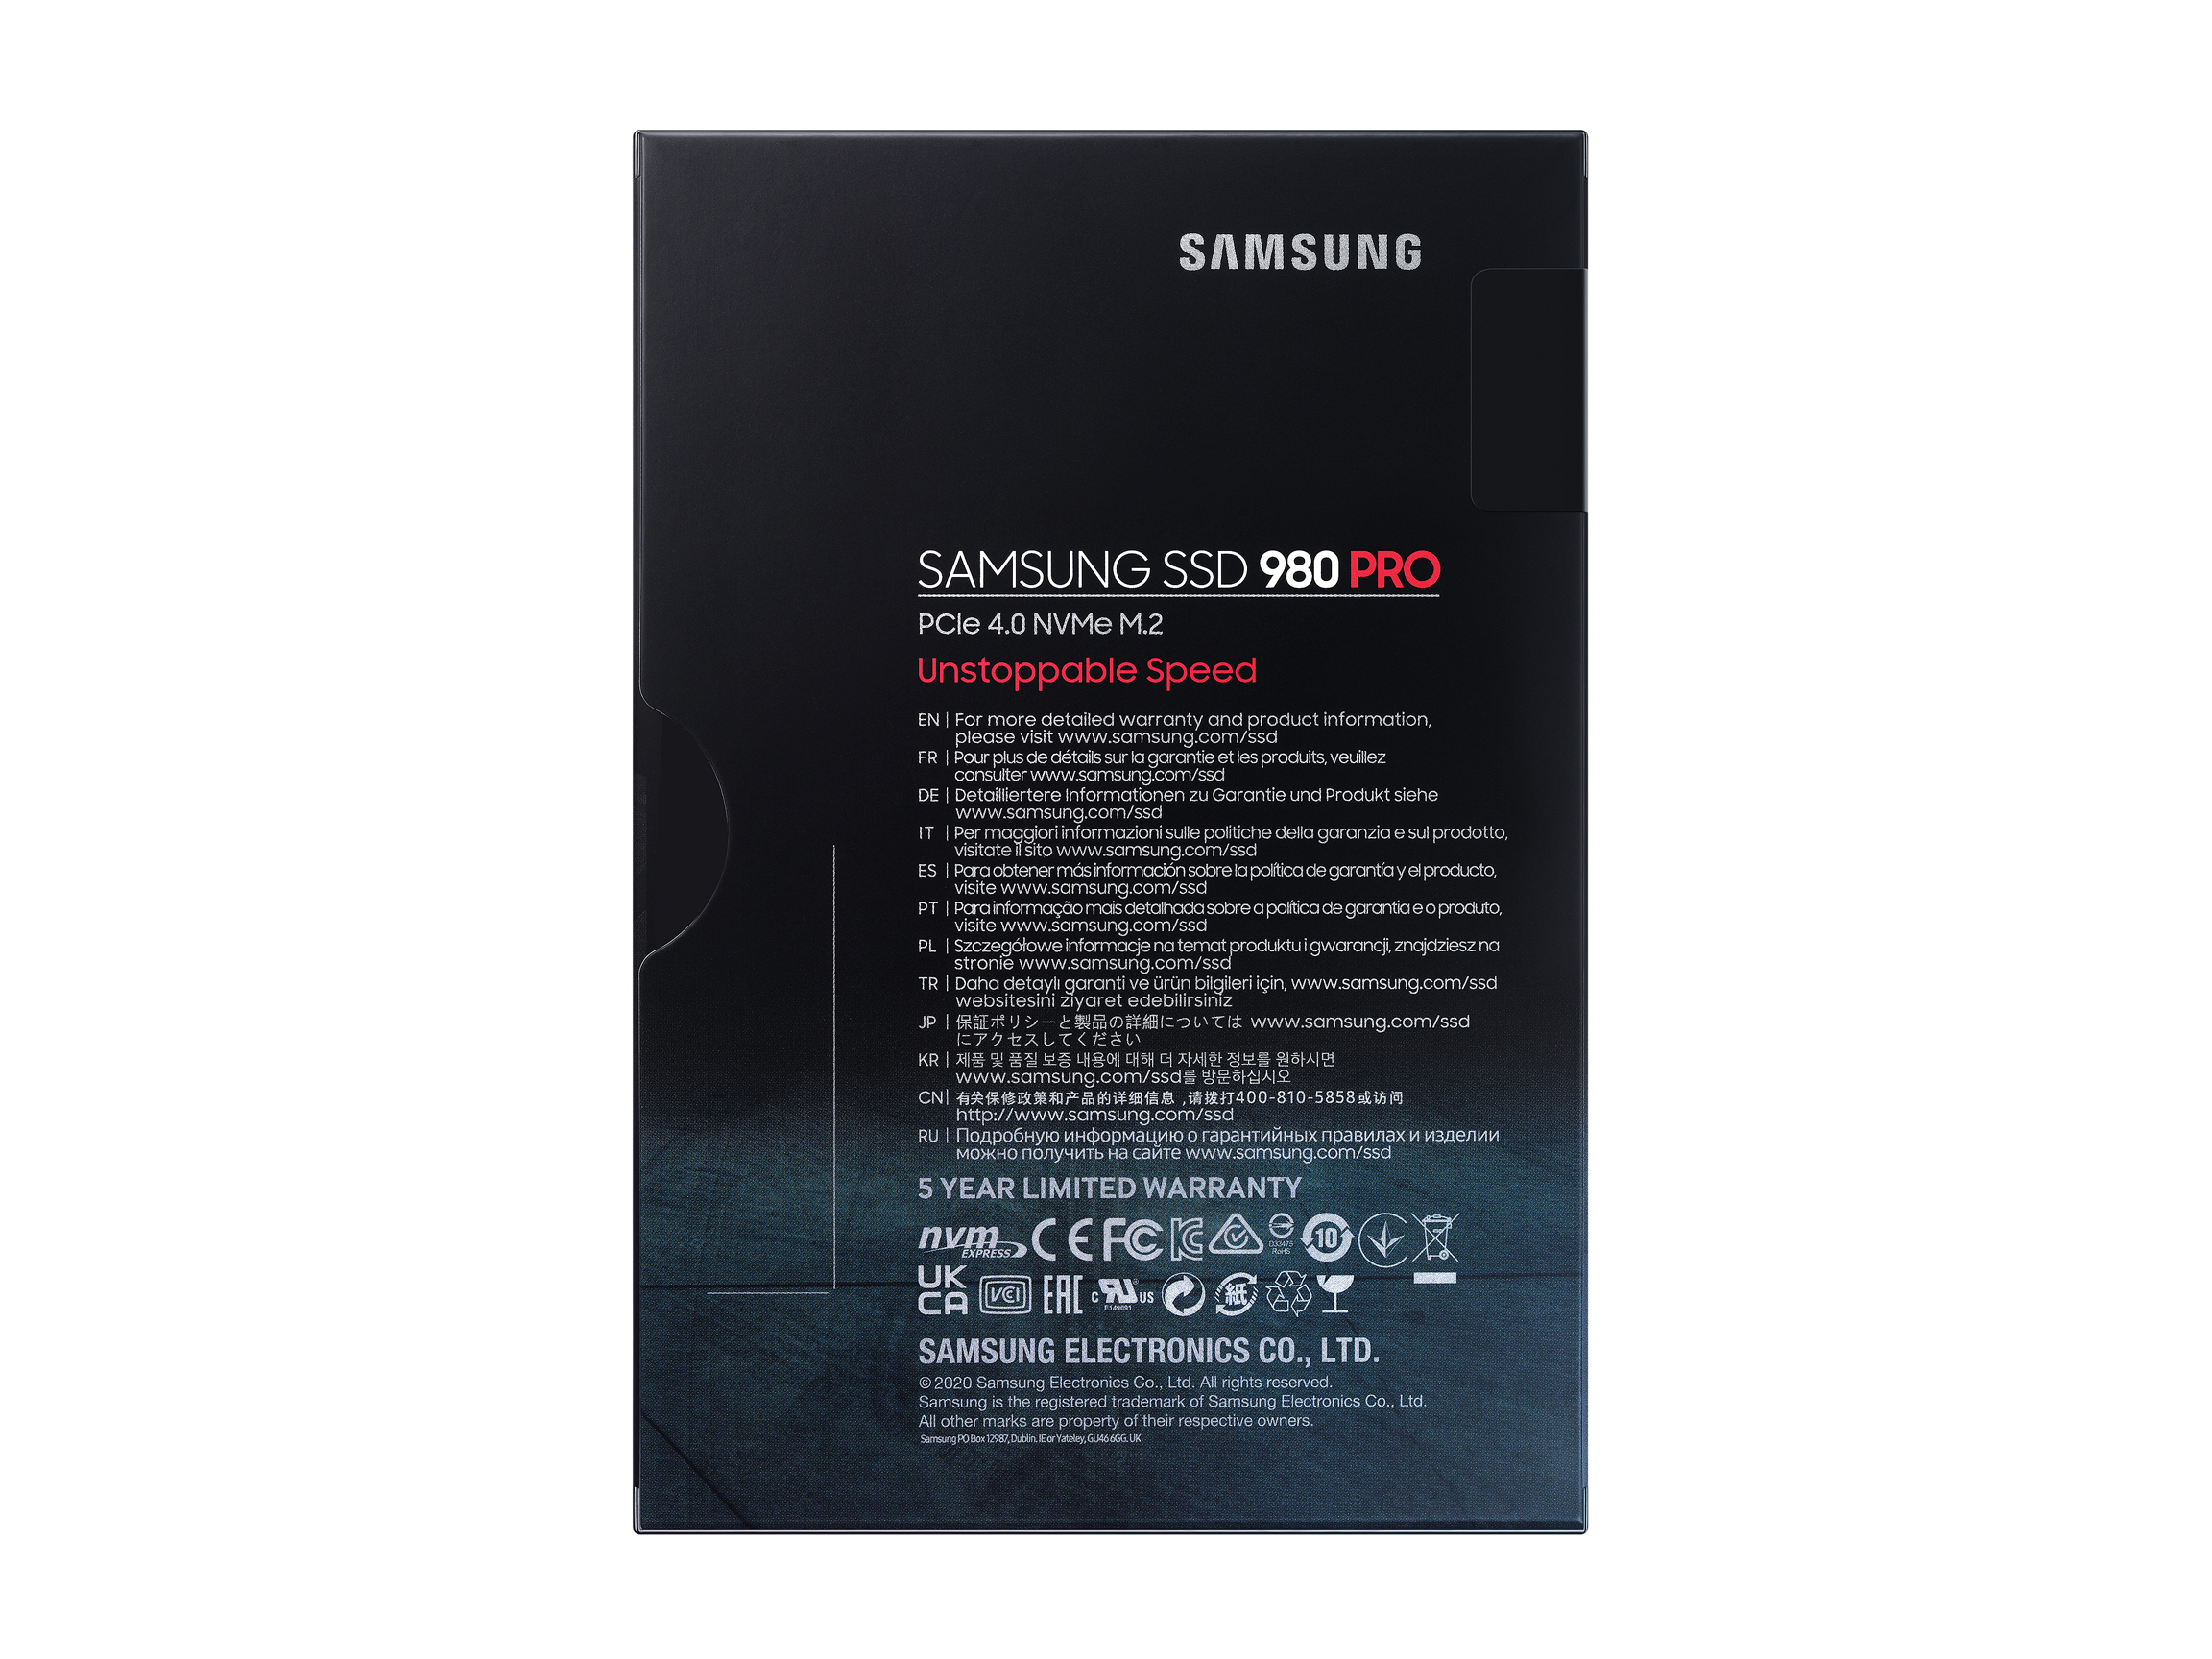 Samsung 970 EVO Plus 1 TB Solid State Drive M.2 2280 Internal PCI